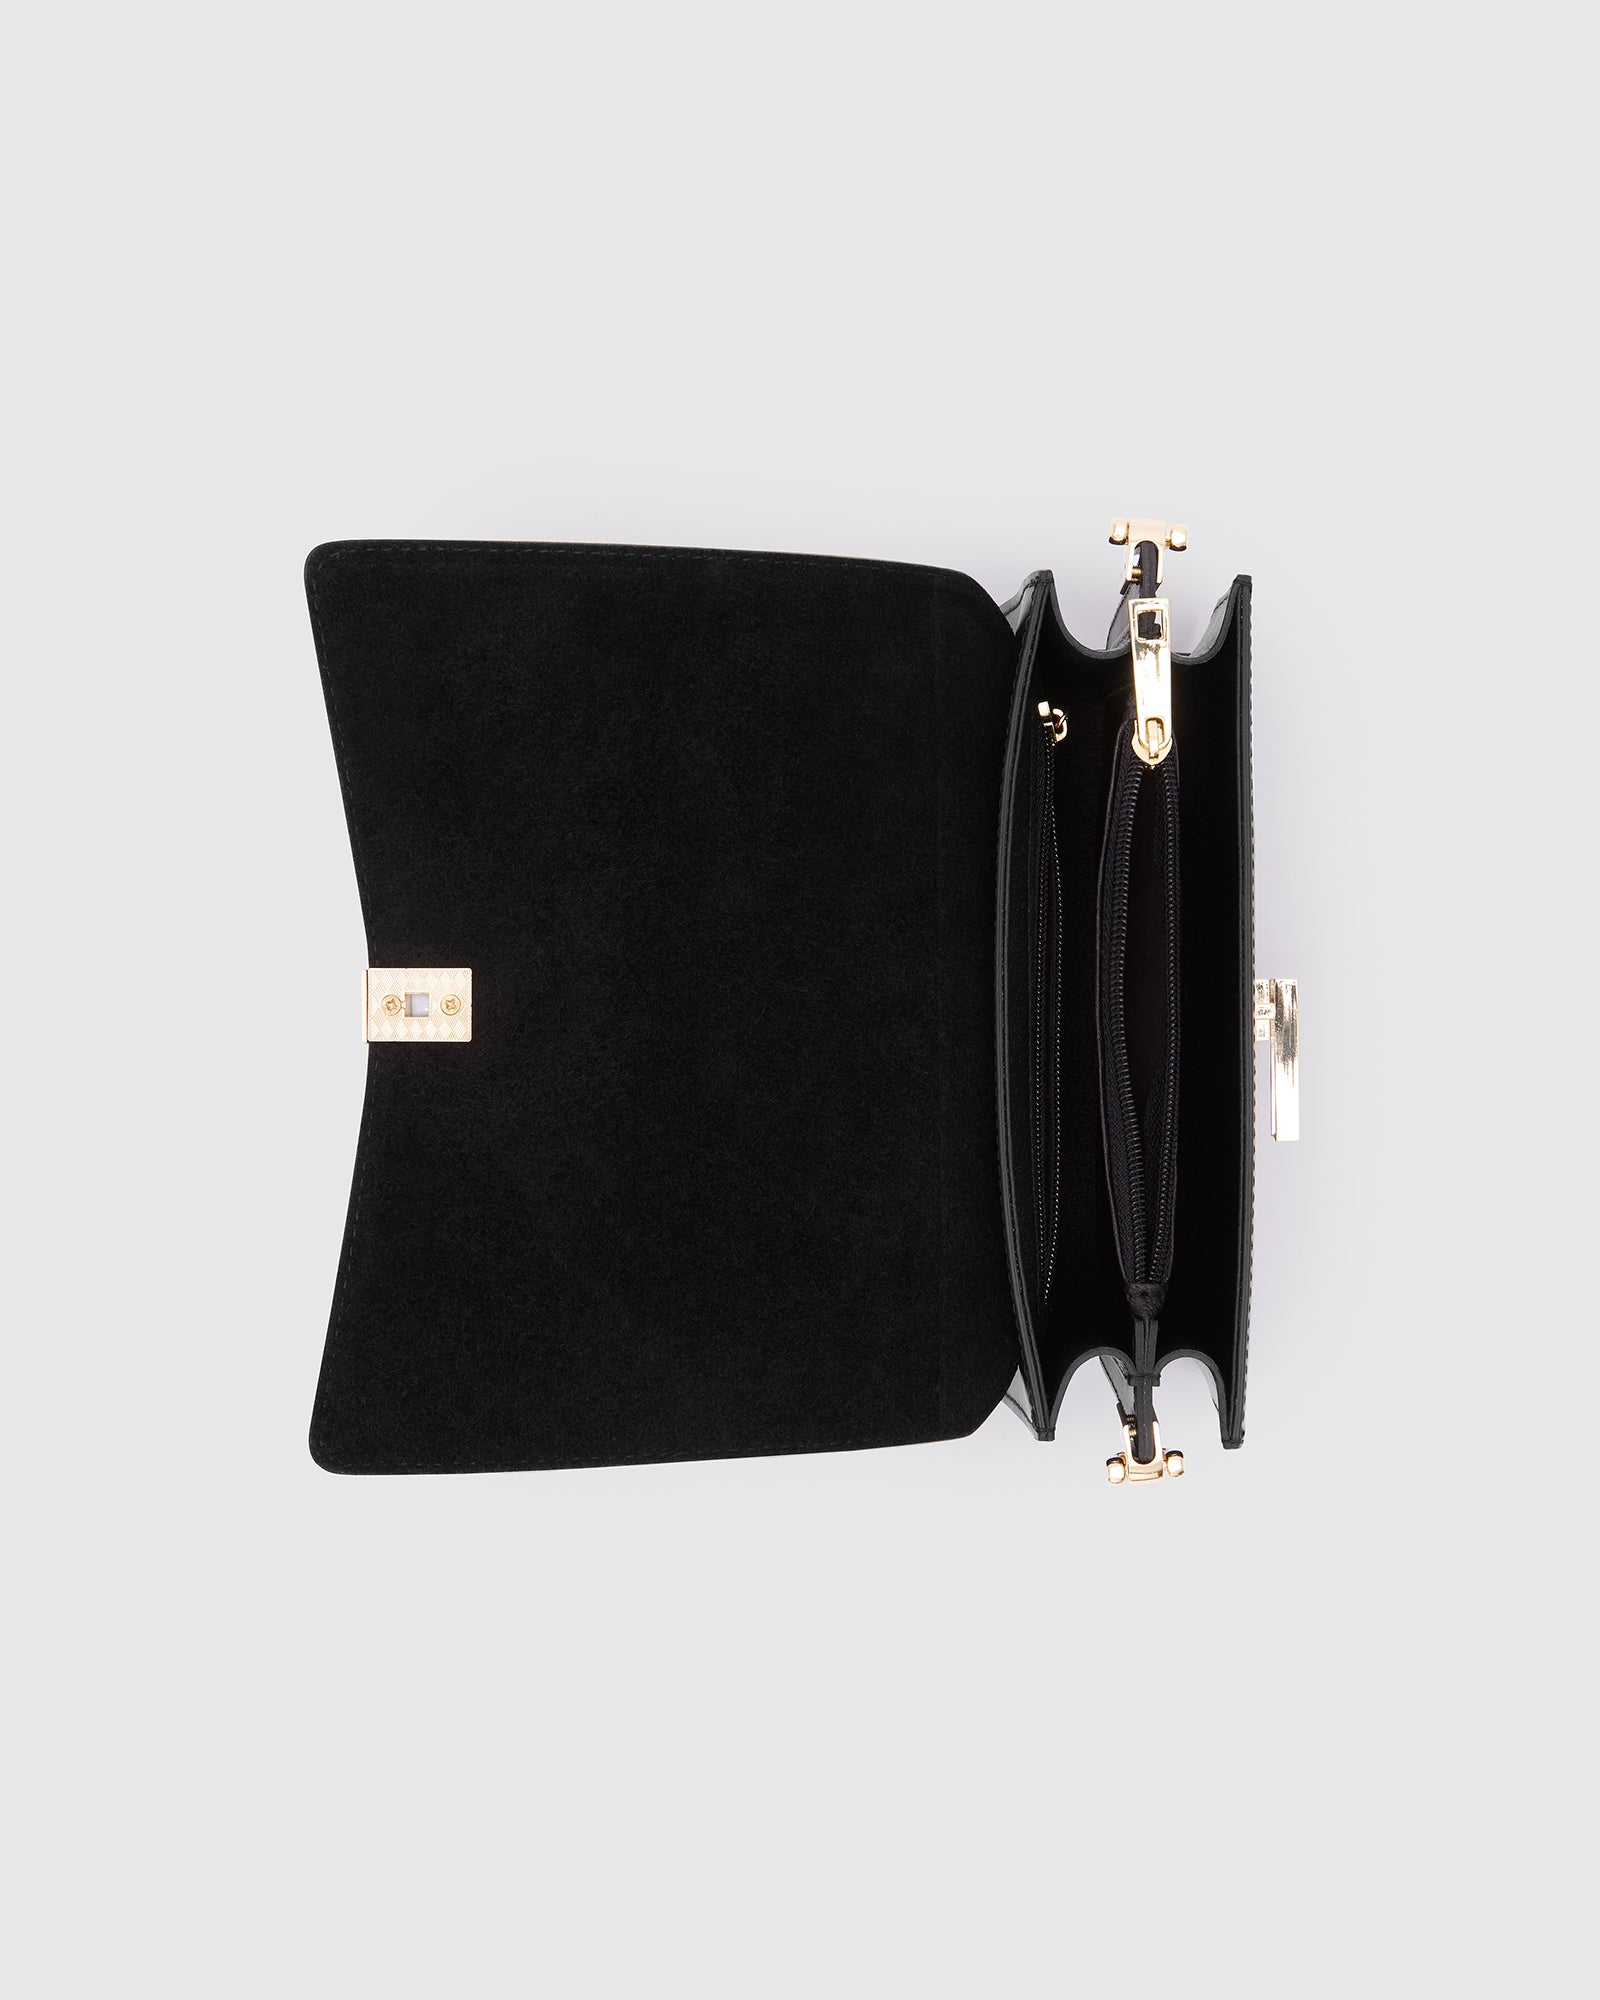 Allegra Black - Leather Crossbody Bag